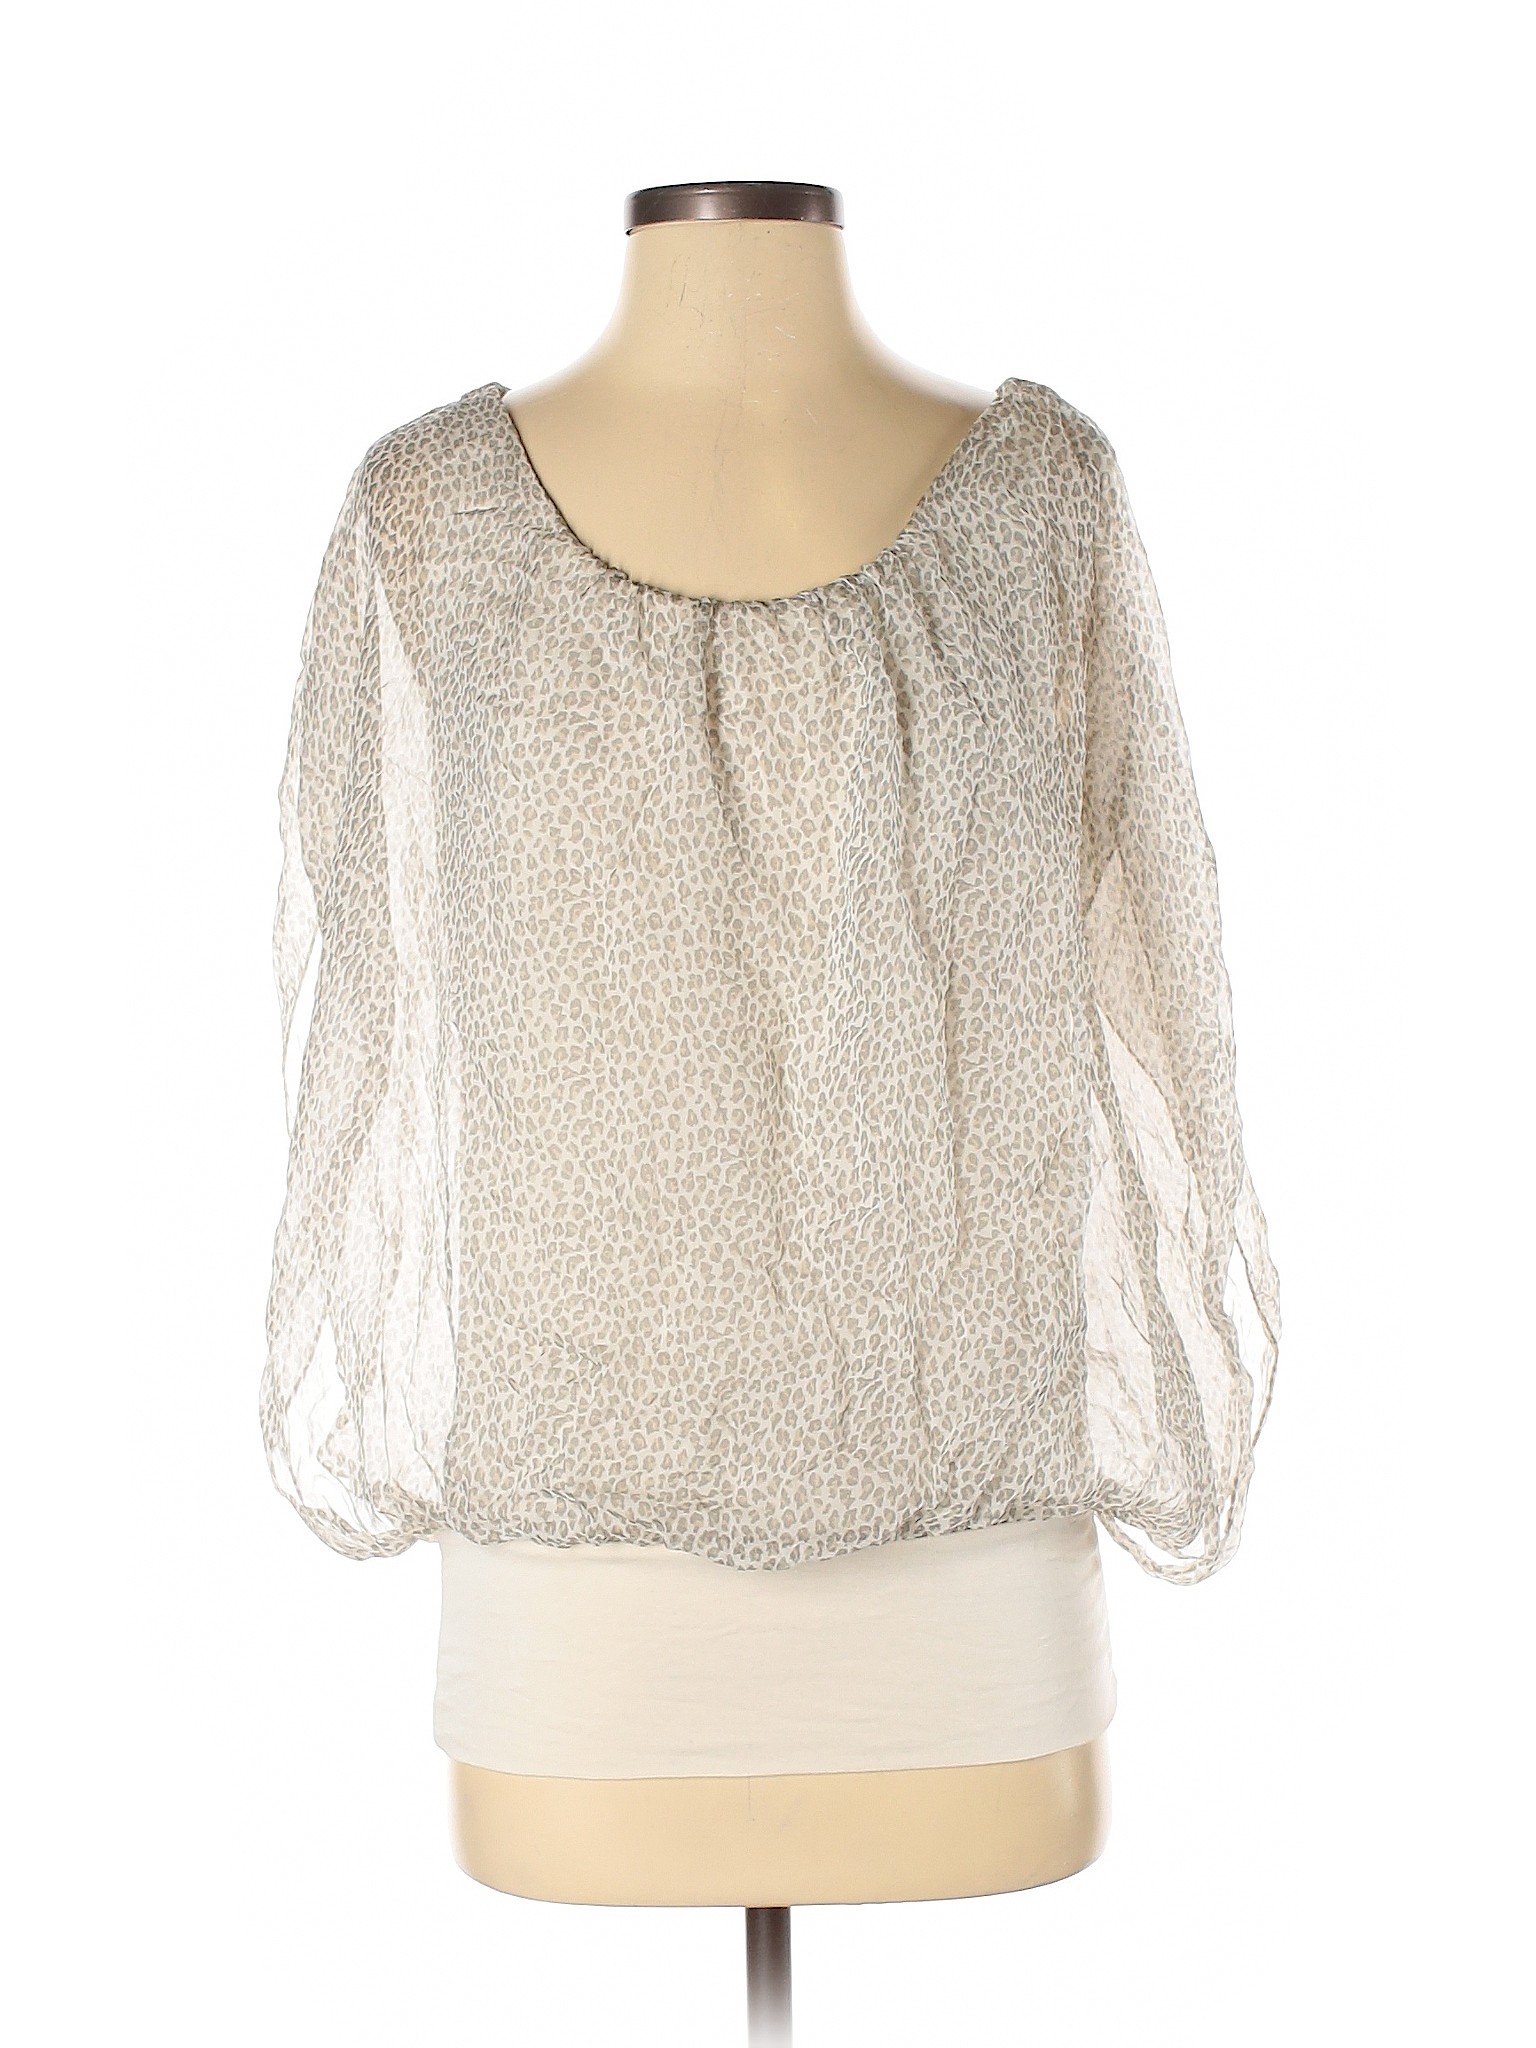 Elena Baldi Women Ivory Short Sleeve Silk Top S | eBay